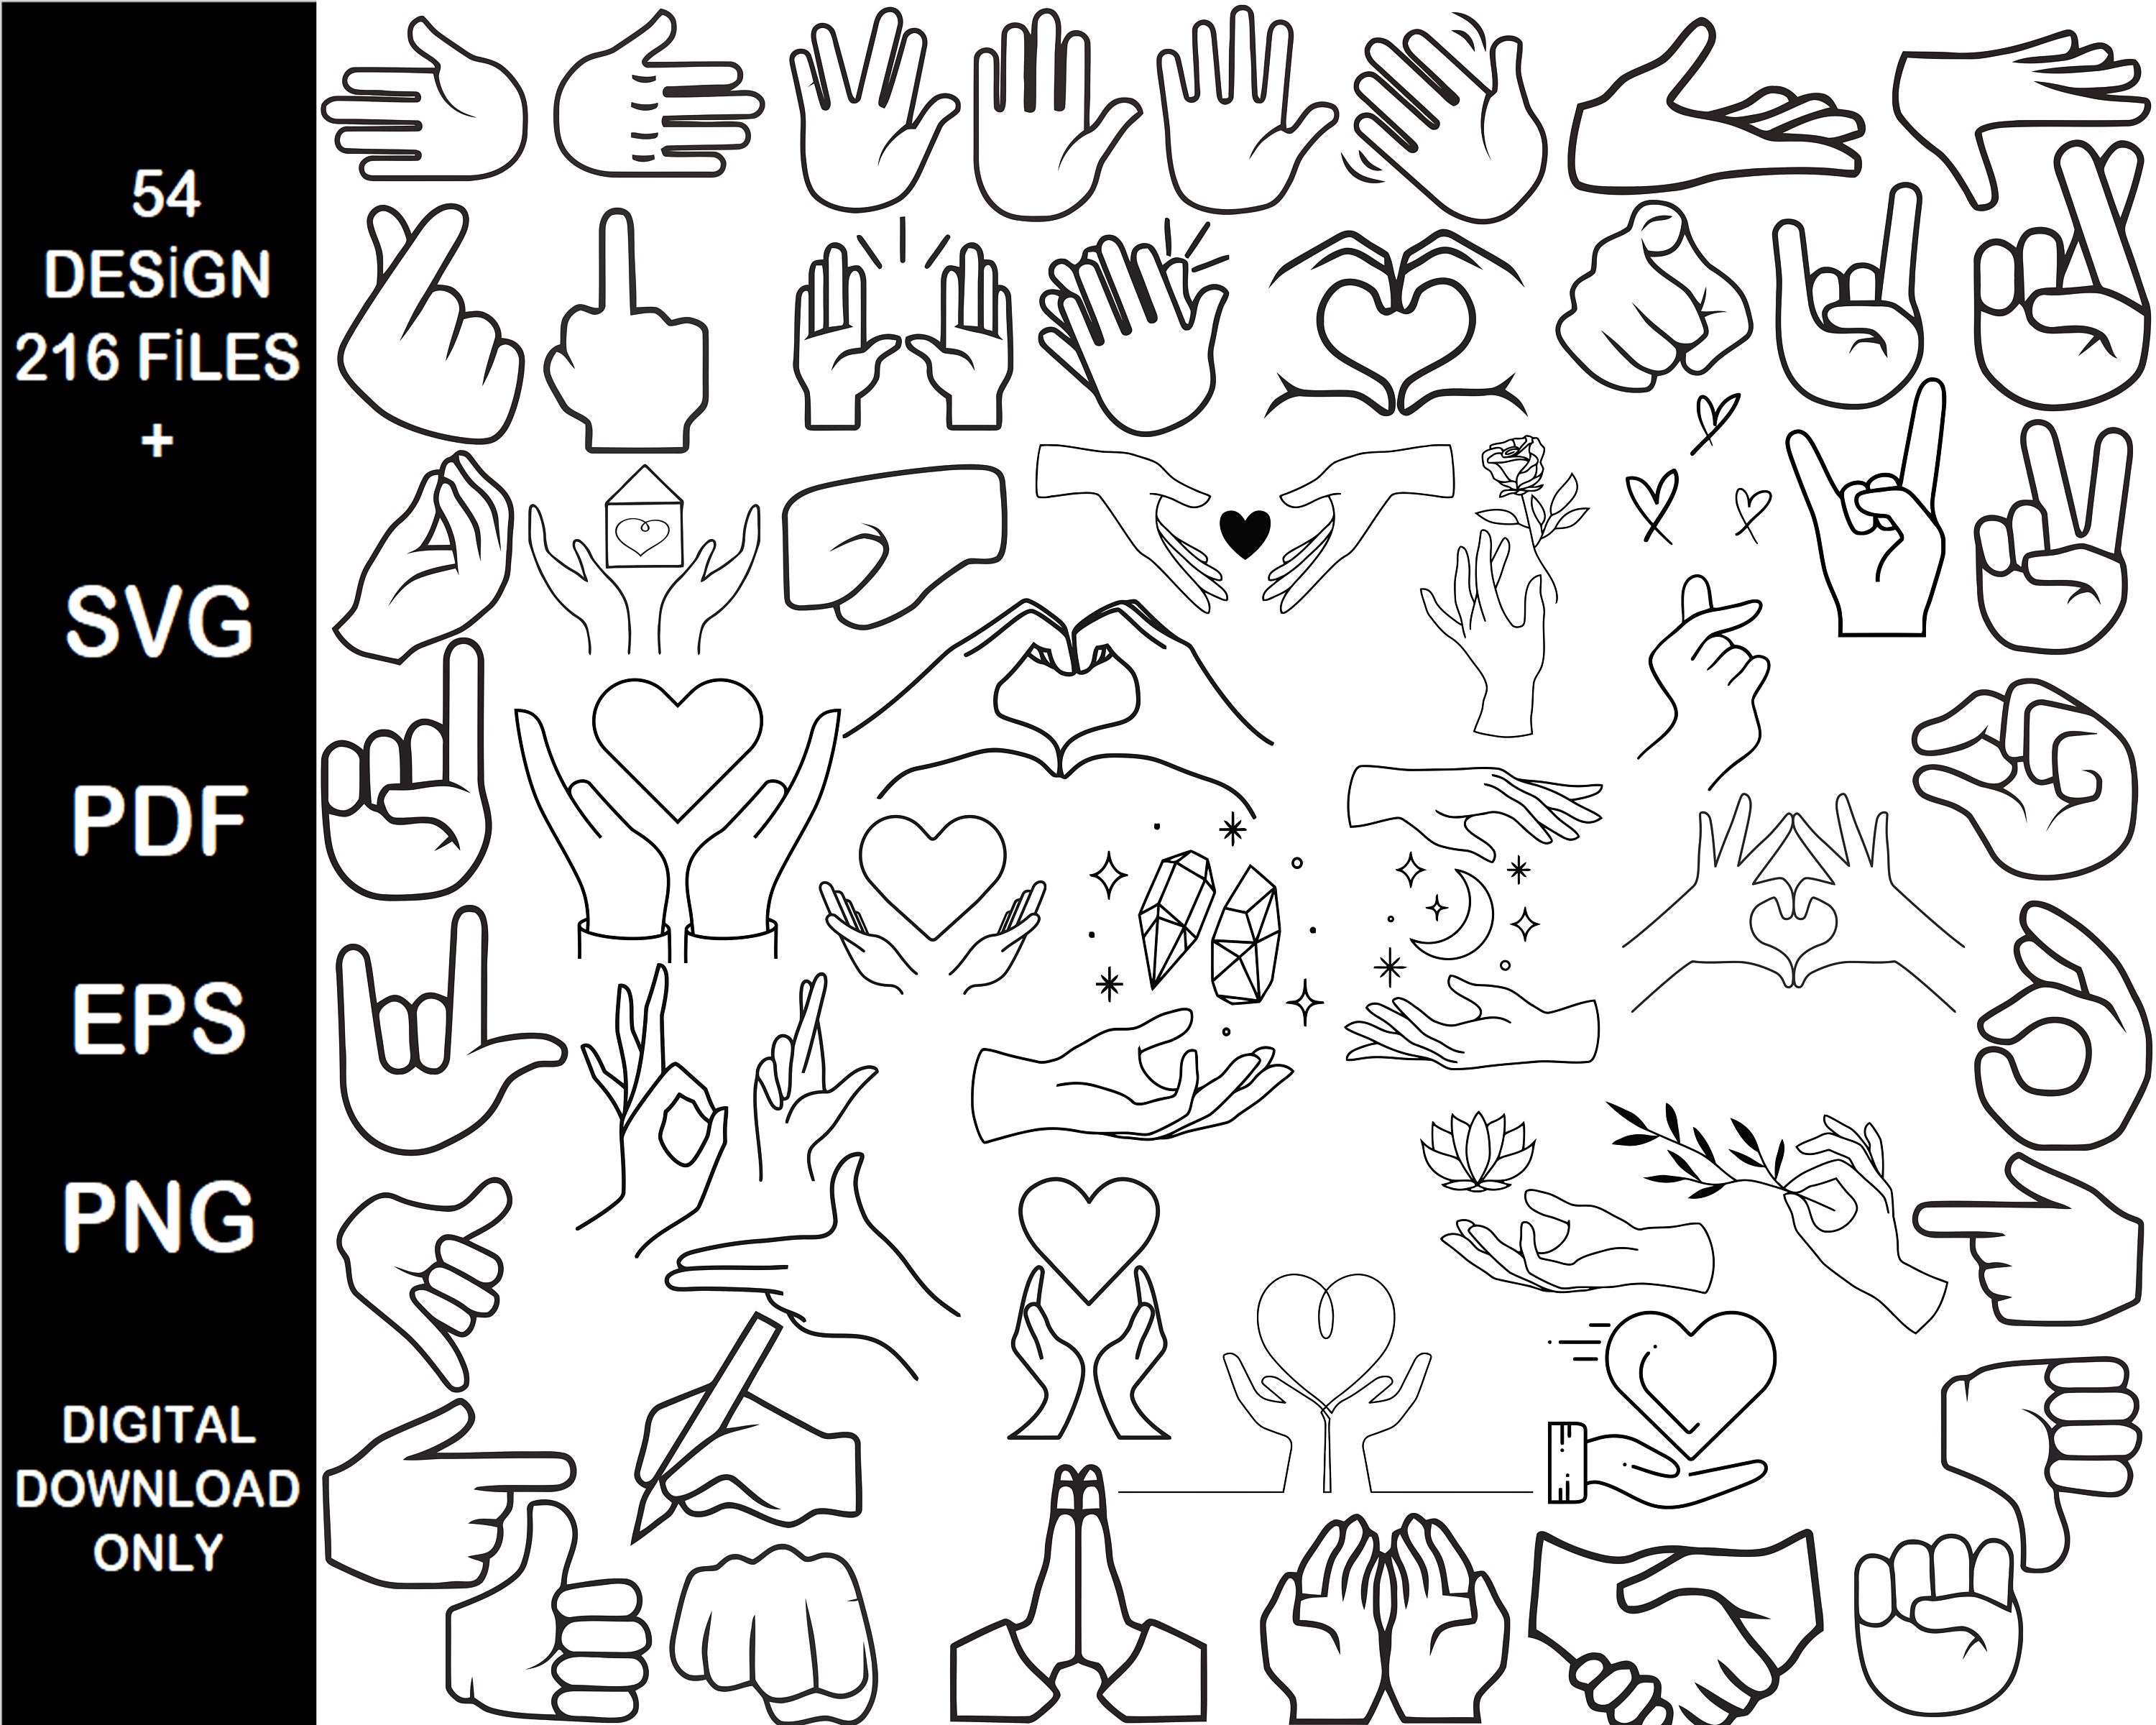 Handshake Icon Hand Gesture Emoji Vector Illustration Stock Illustration -  Download Image Now - iStock